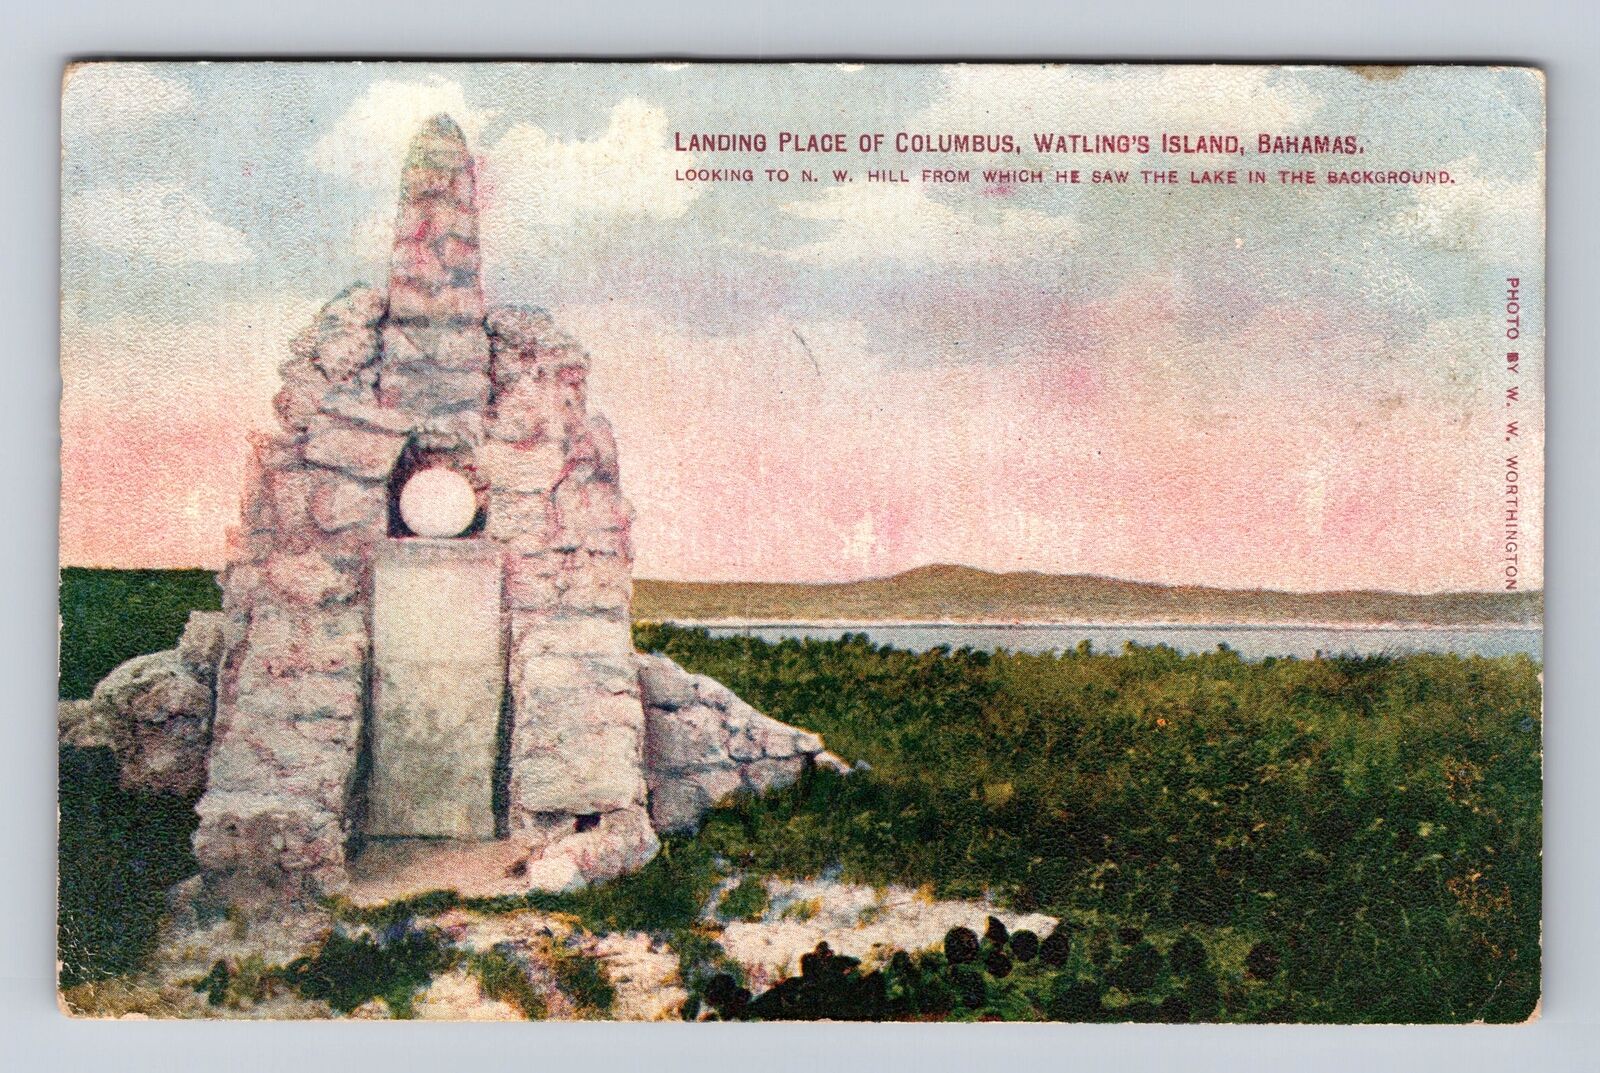 Watling's Island-Bahamas, Landing Place Of Columbus, Antique, Vintage Postcard